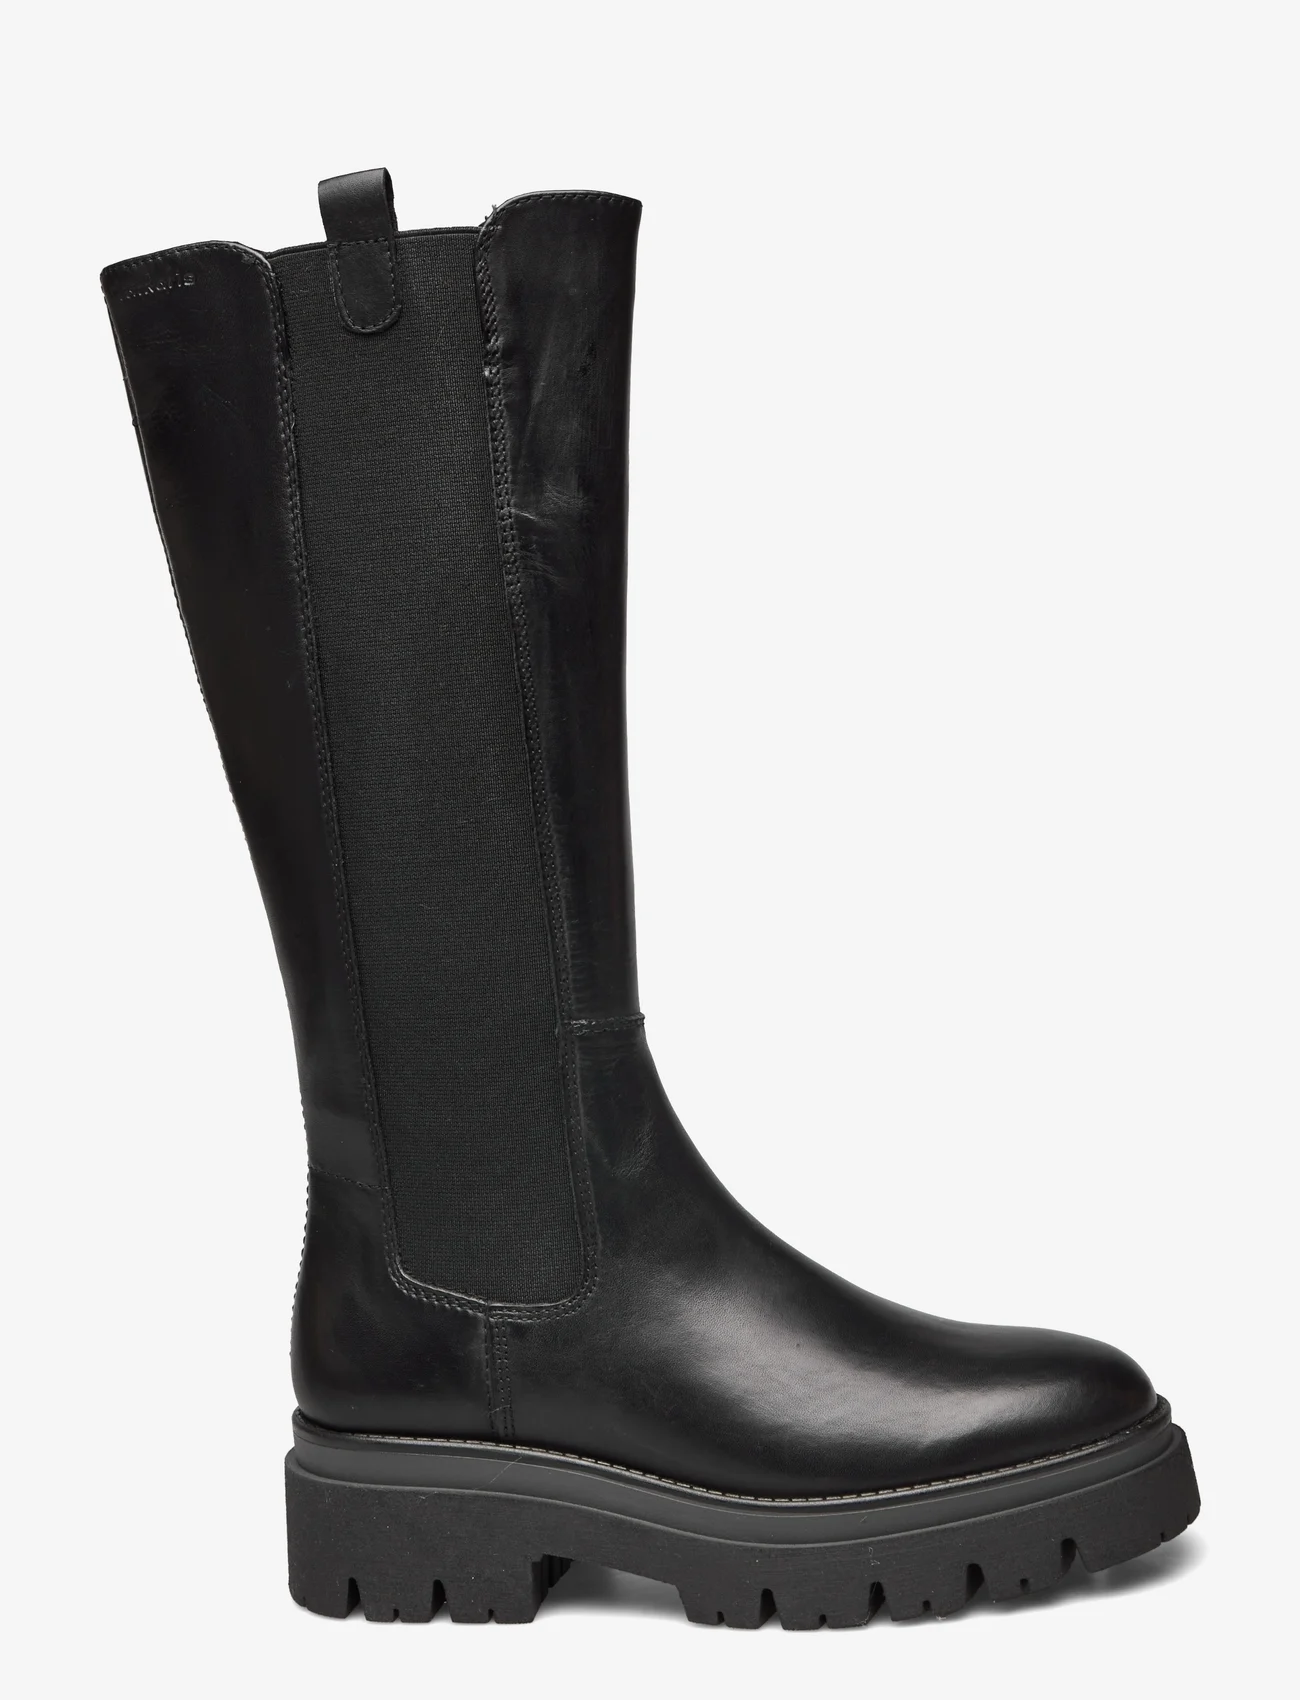 Tamaris - Women Boots - kniehohe stiefel - black leather - 1